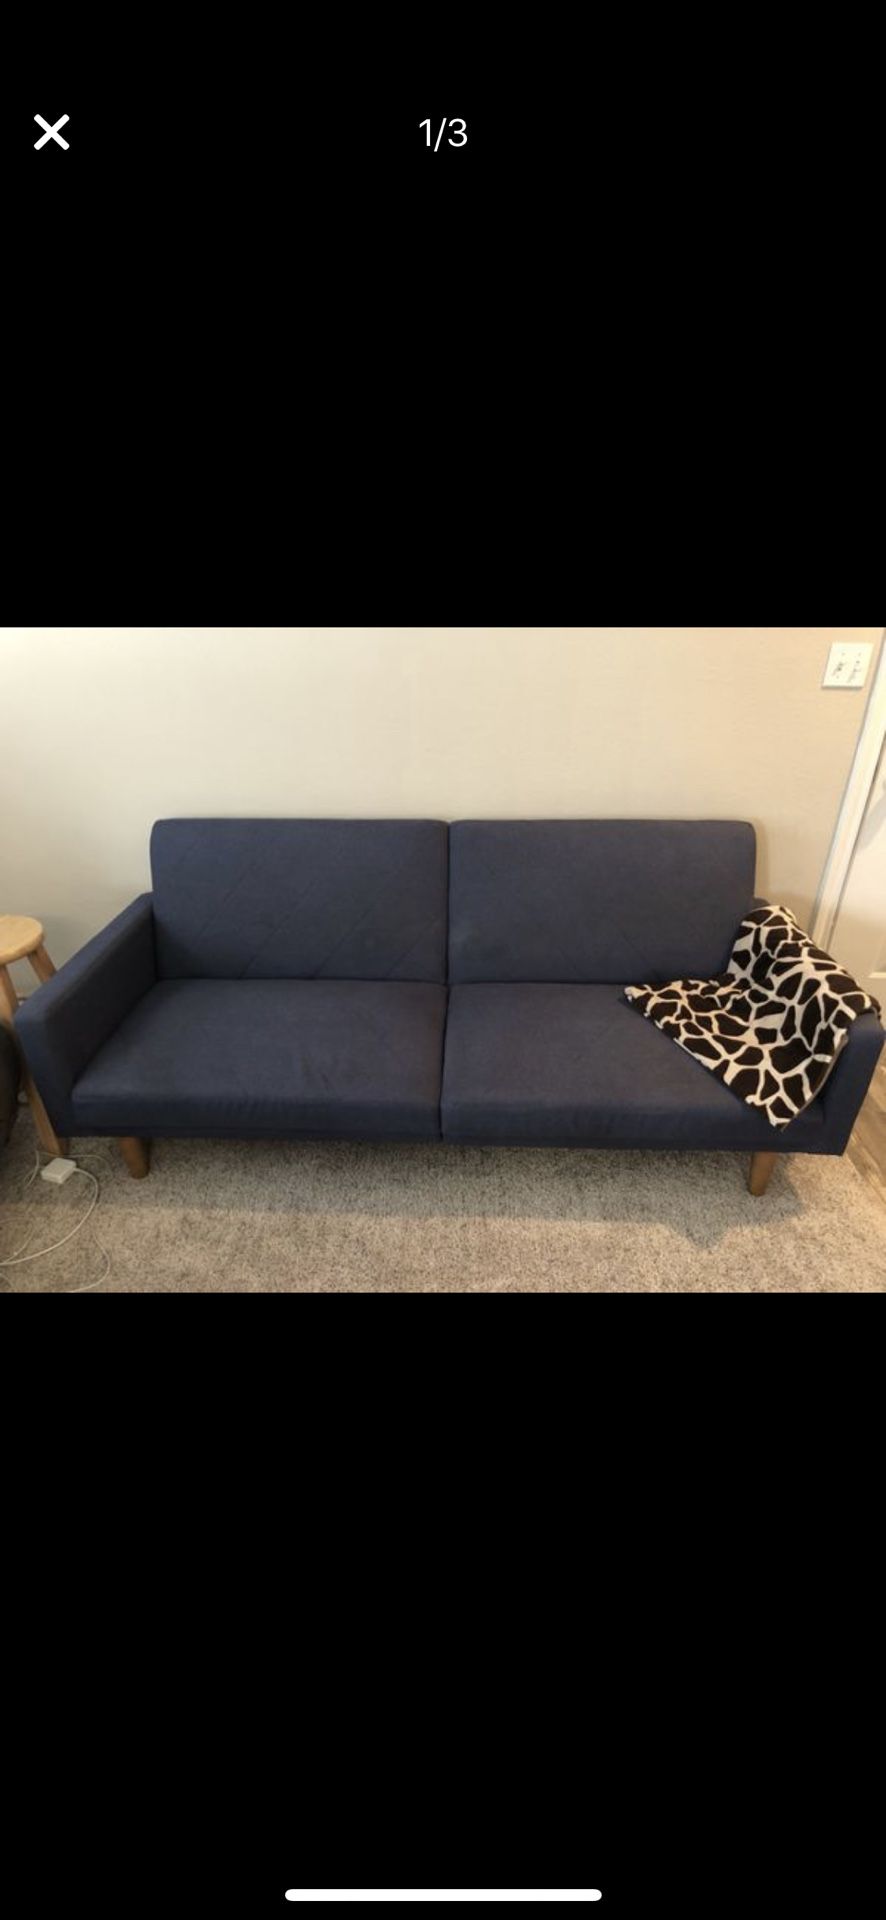 Minimalist couch/futon for Sale in Corpus Christi, TX - OfferUp